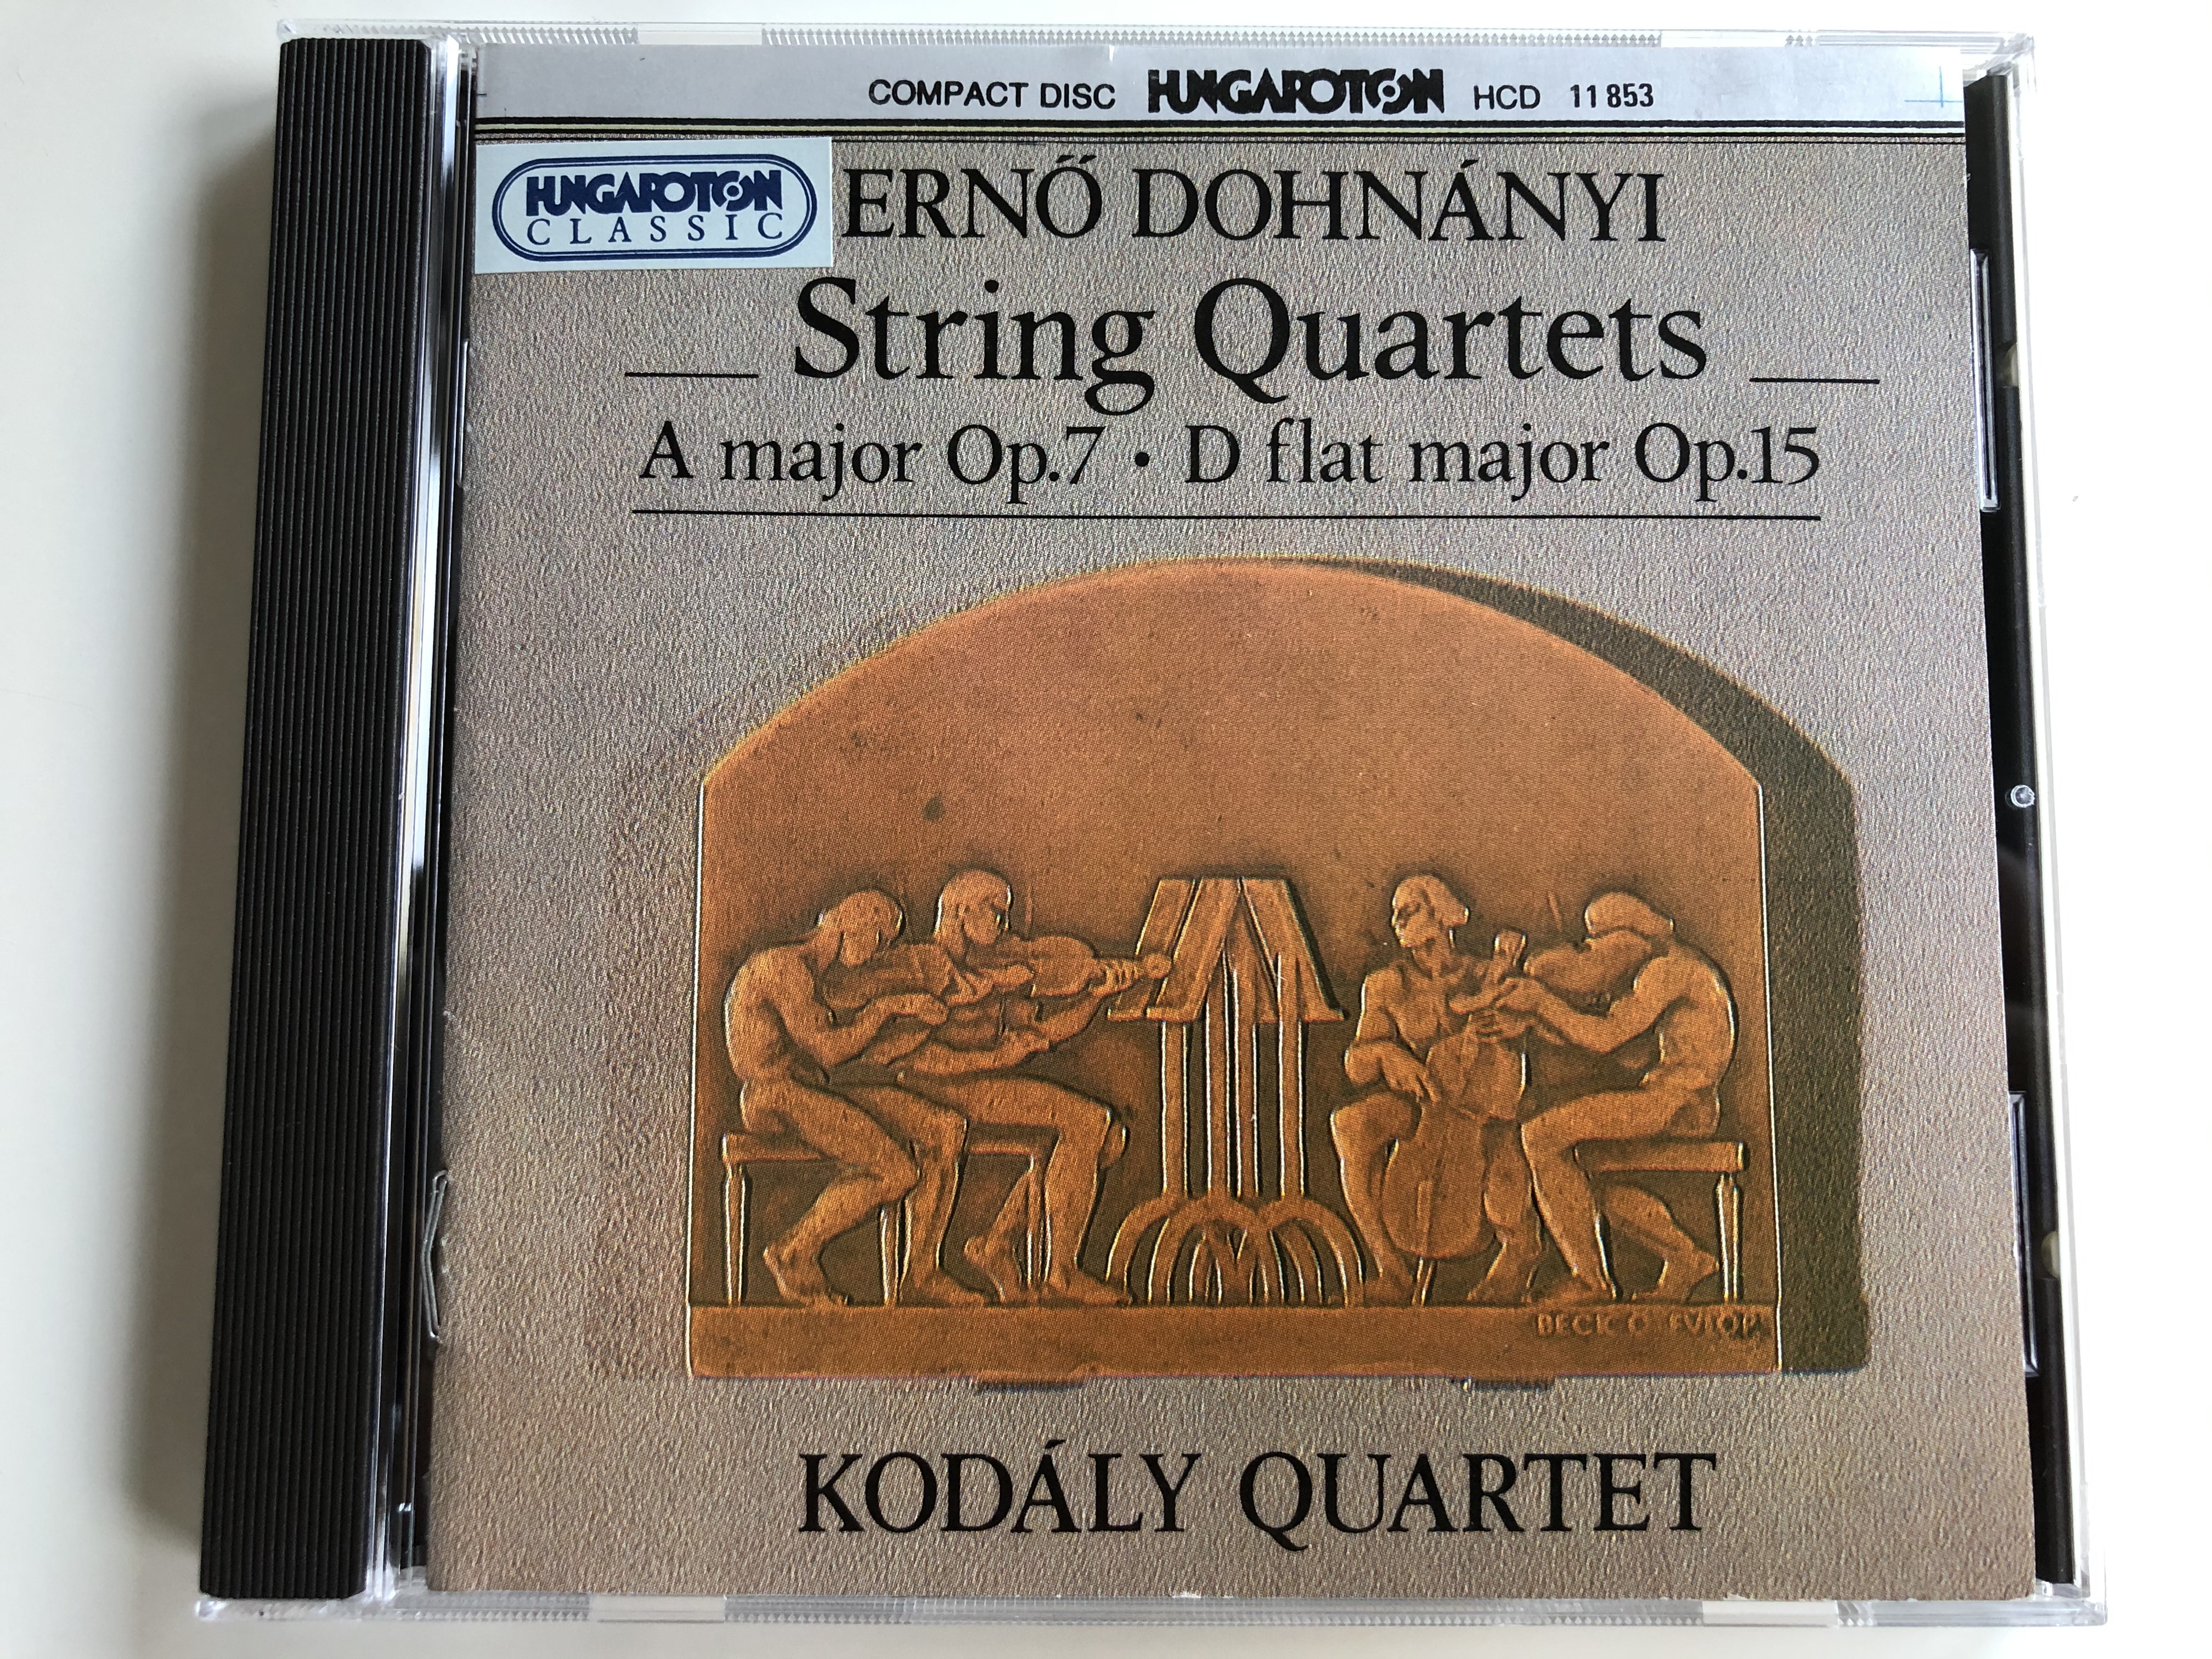 erno-dohnanyi-string-quartets-a-major-op.7-d-flat-major-op.15-kod-ly-quartet-hungaroton-audio-cd-1994-stereo-hcd-11853-1-.jpg